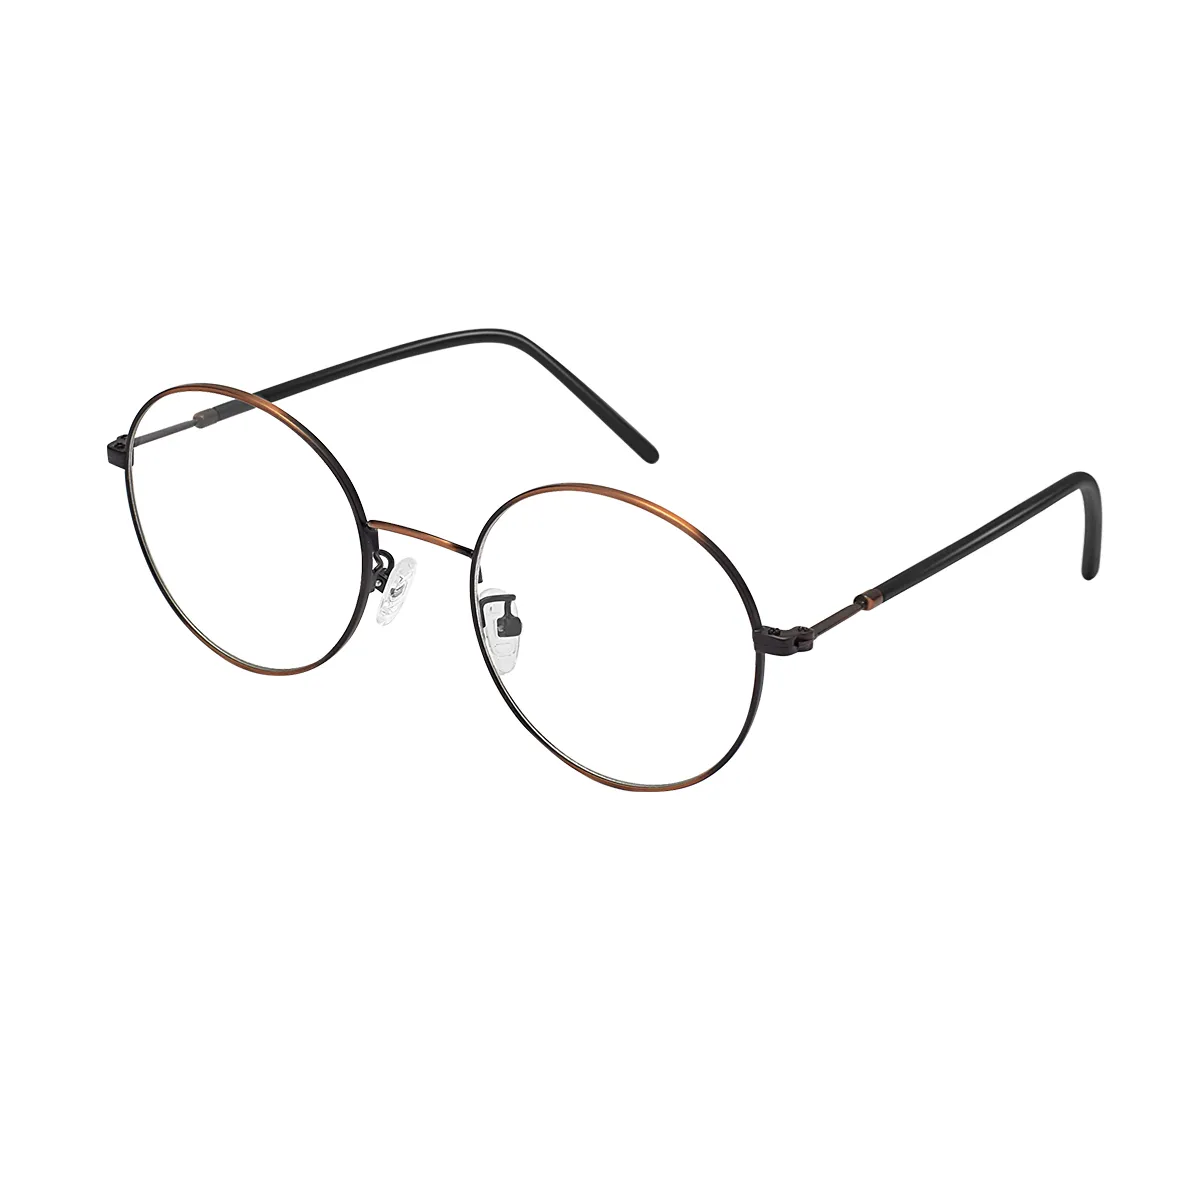 Myers - Round Brown Glasses for Men & Women